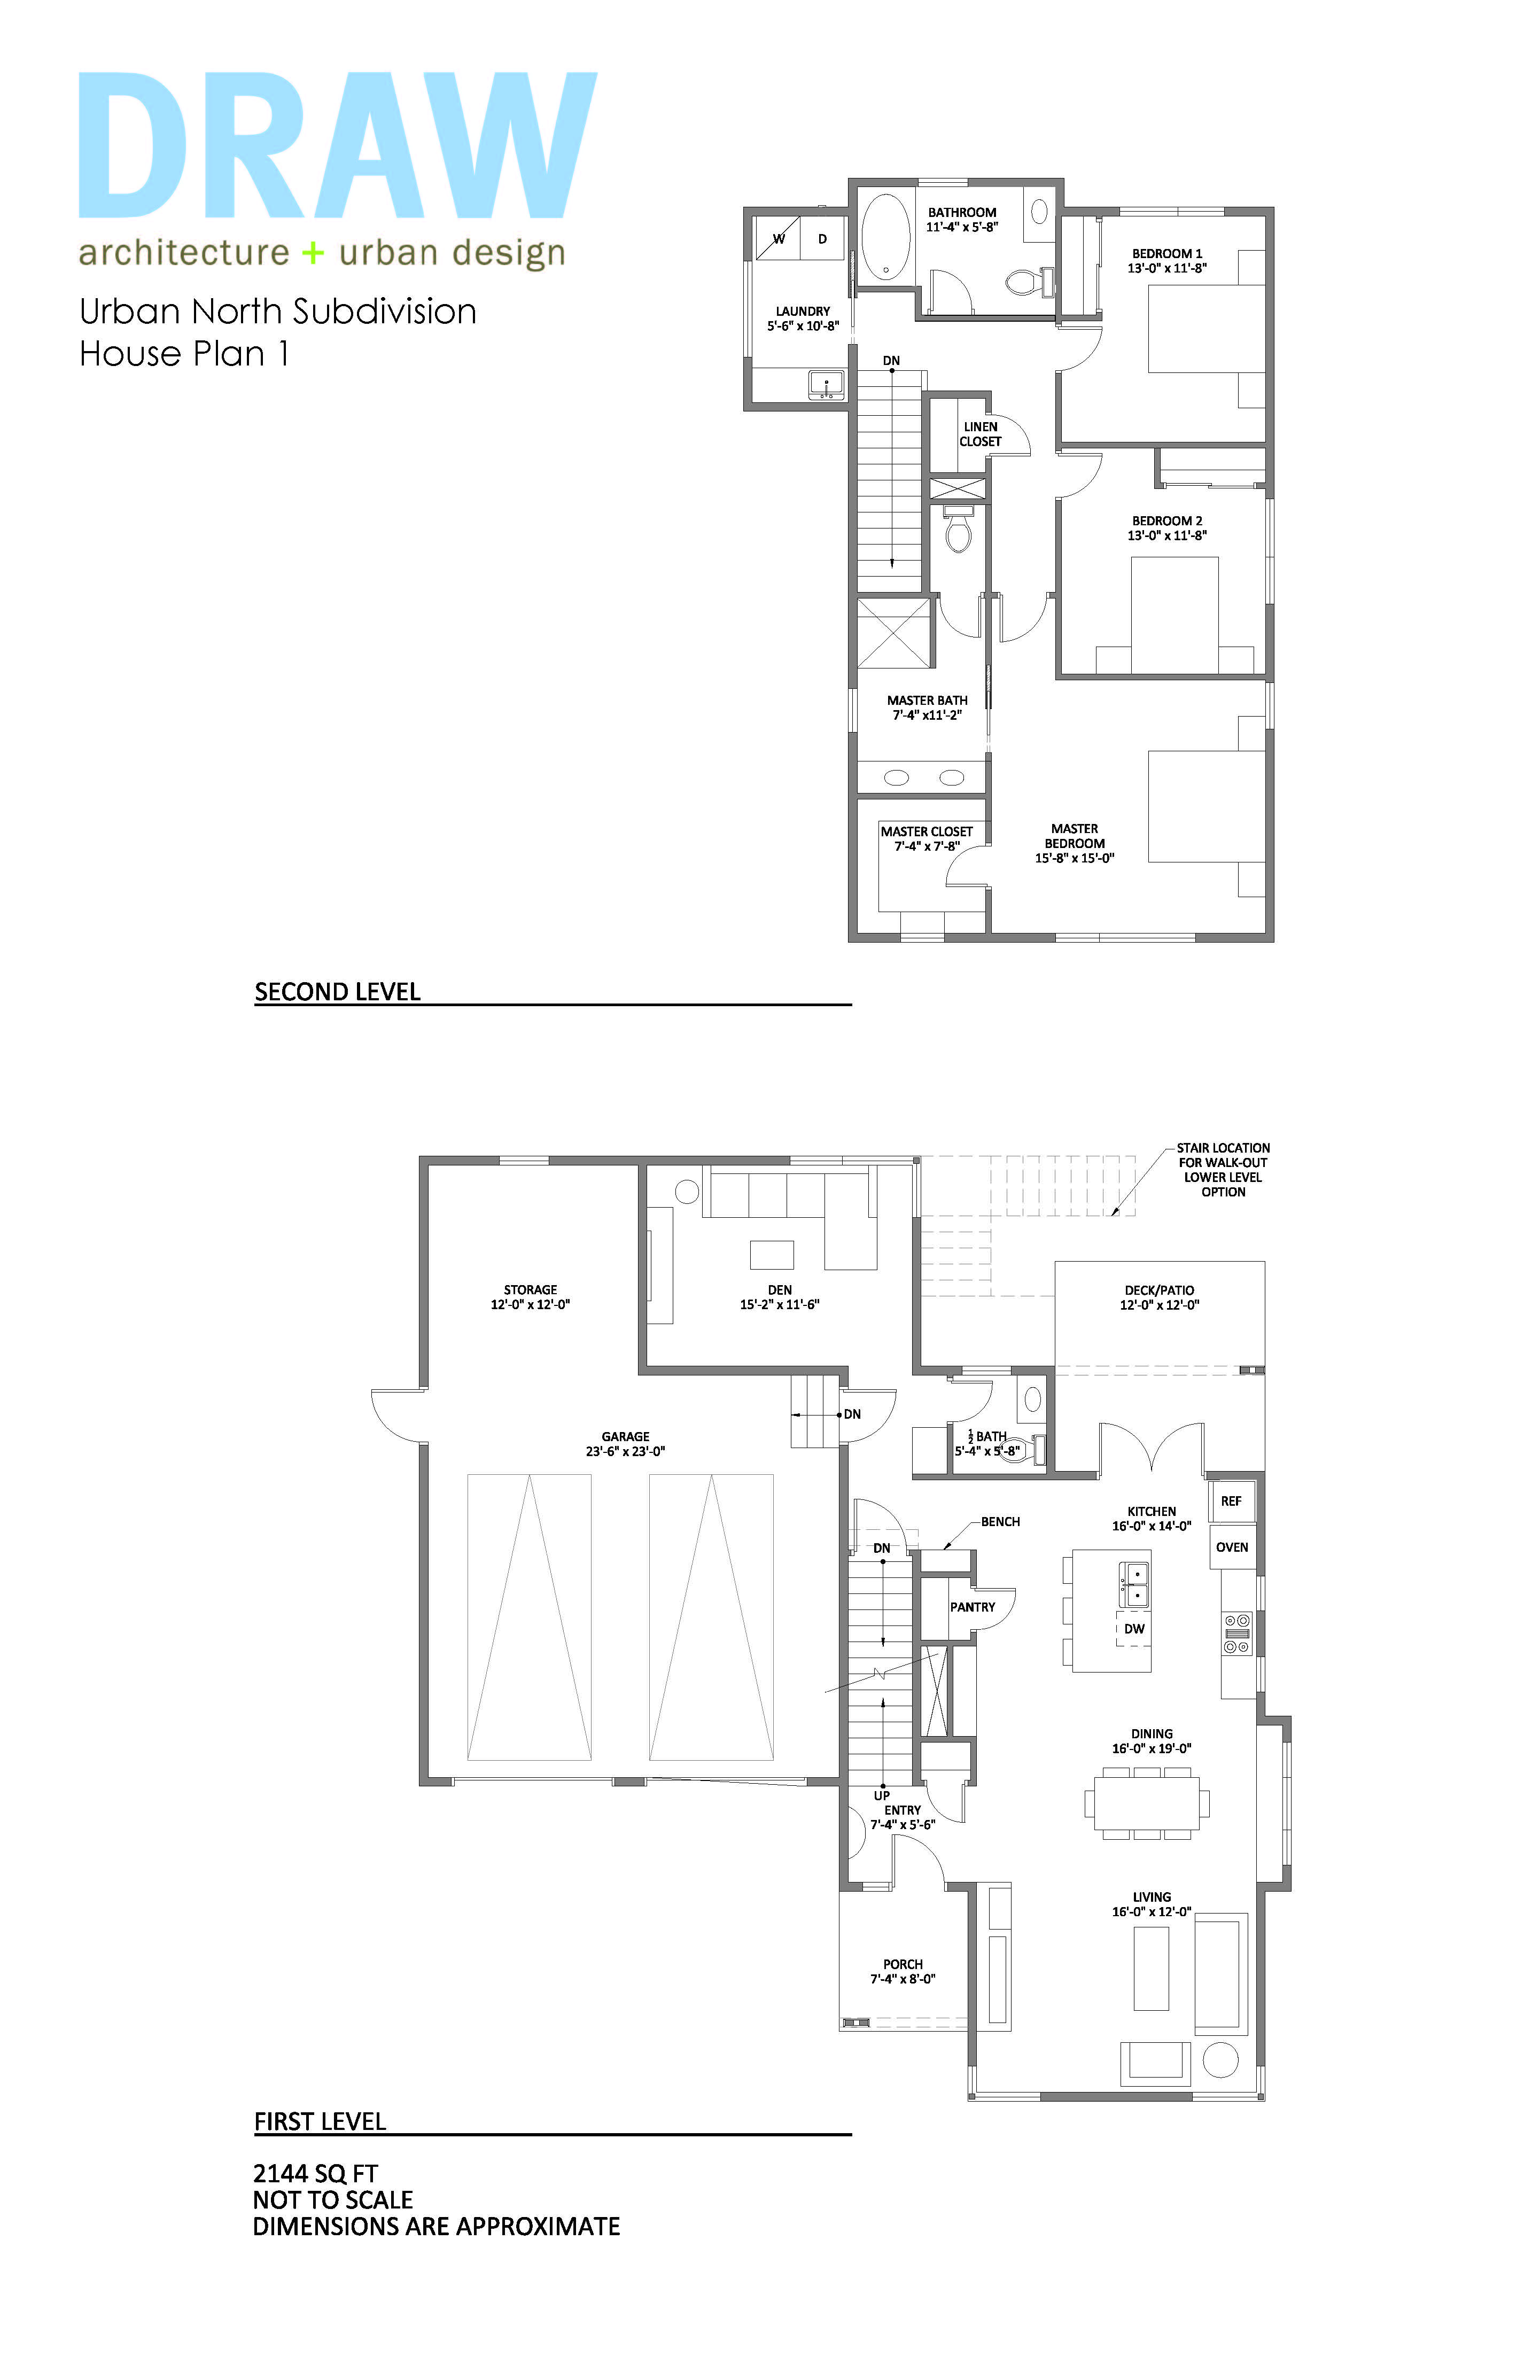 House Plan 1 Urban North Kcmo S New Modern Subdivision